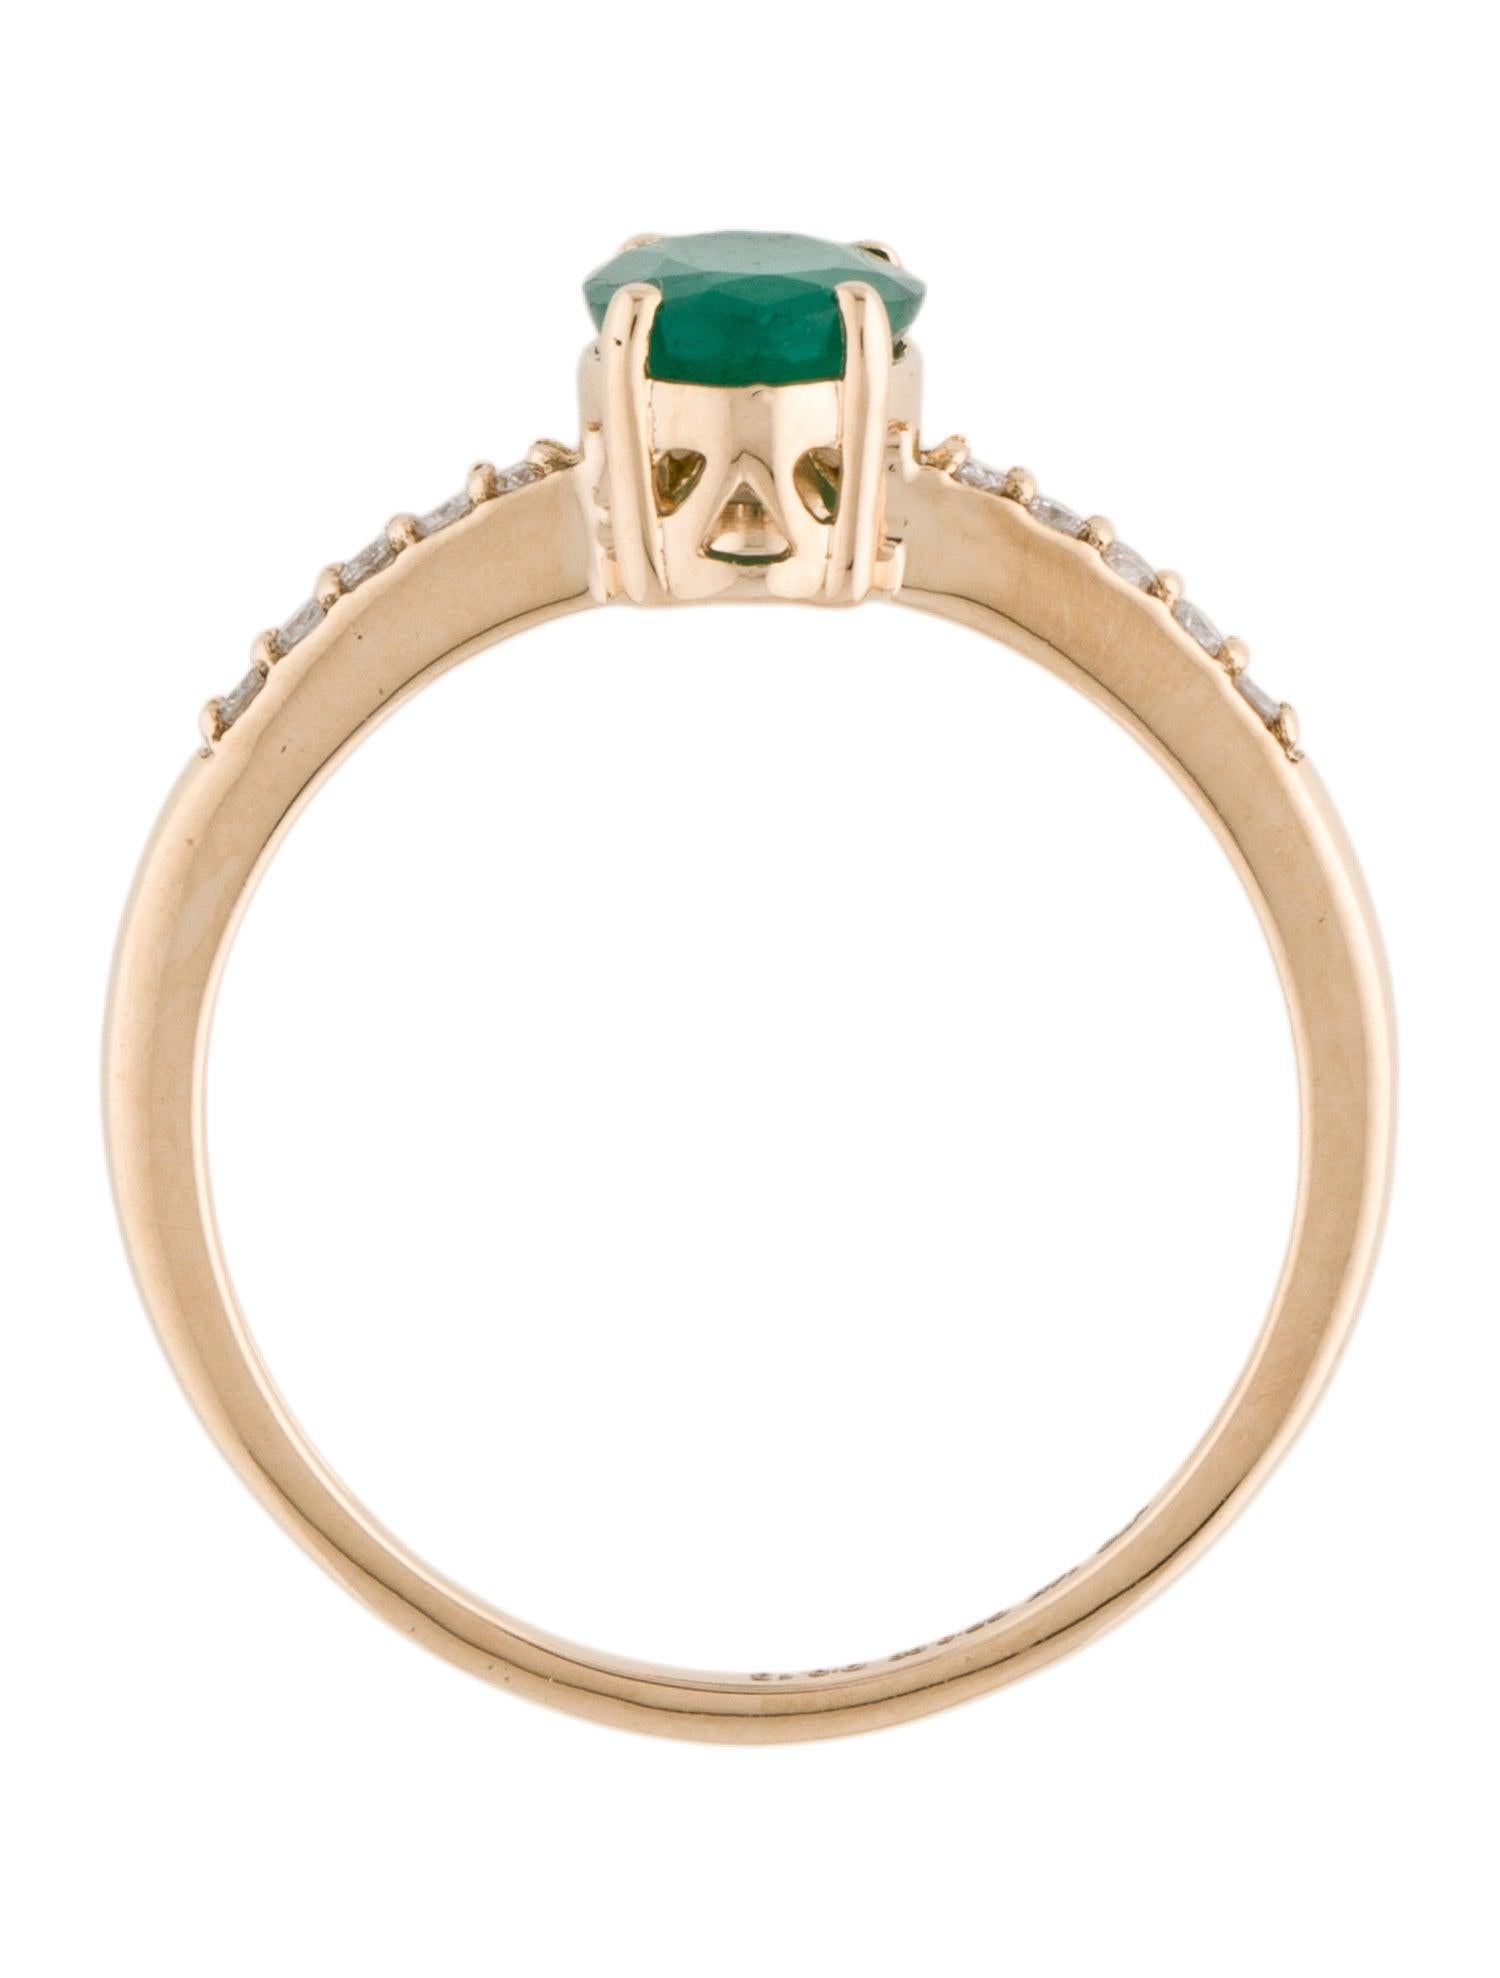 Brilliant Cut Captivating 14K Gold 1.12ctw Emerald & Diamond Ring - Size 8.75 - Fine Luxury For Sale